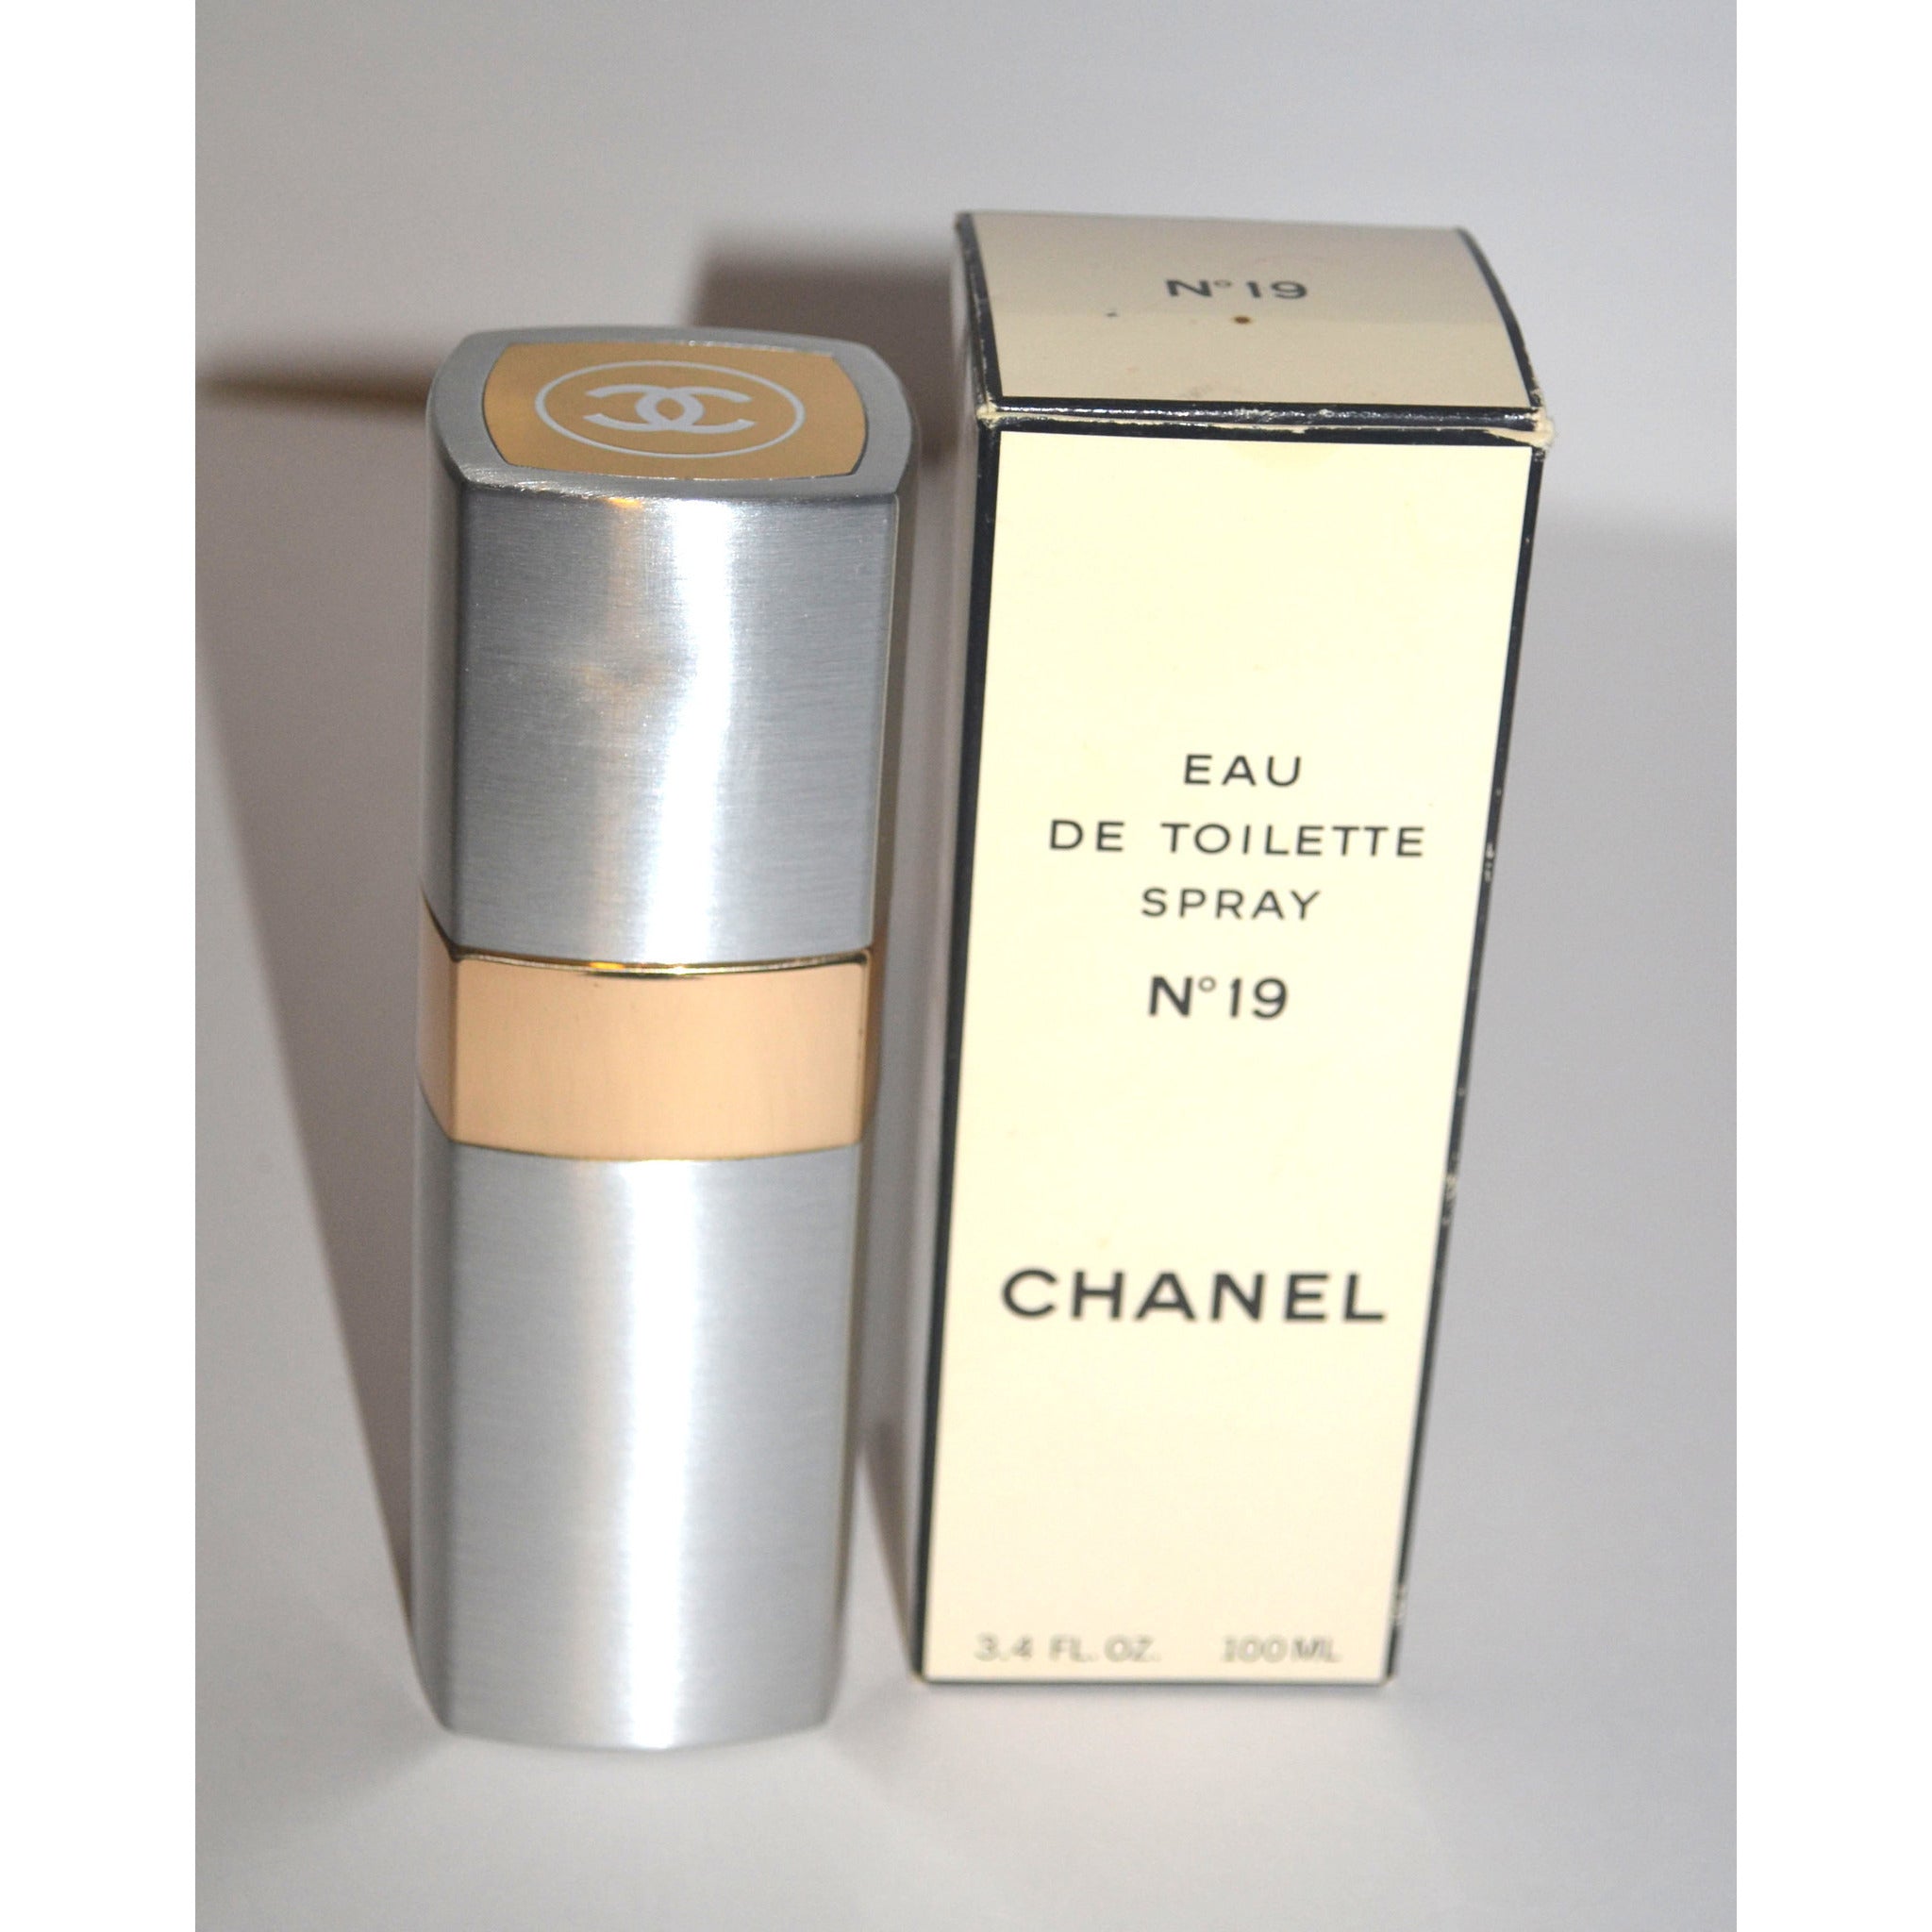 Chanel No. 19 eau de parfum vintage